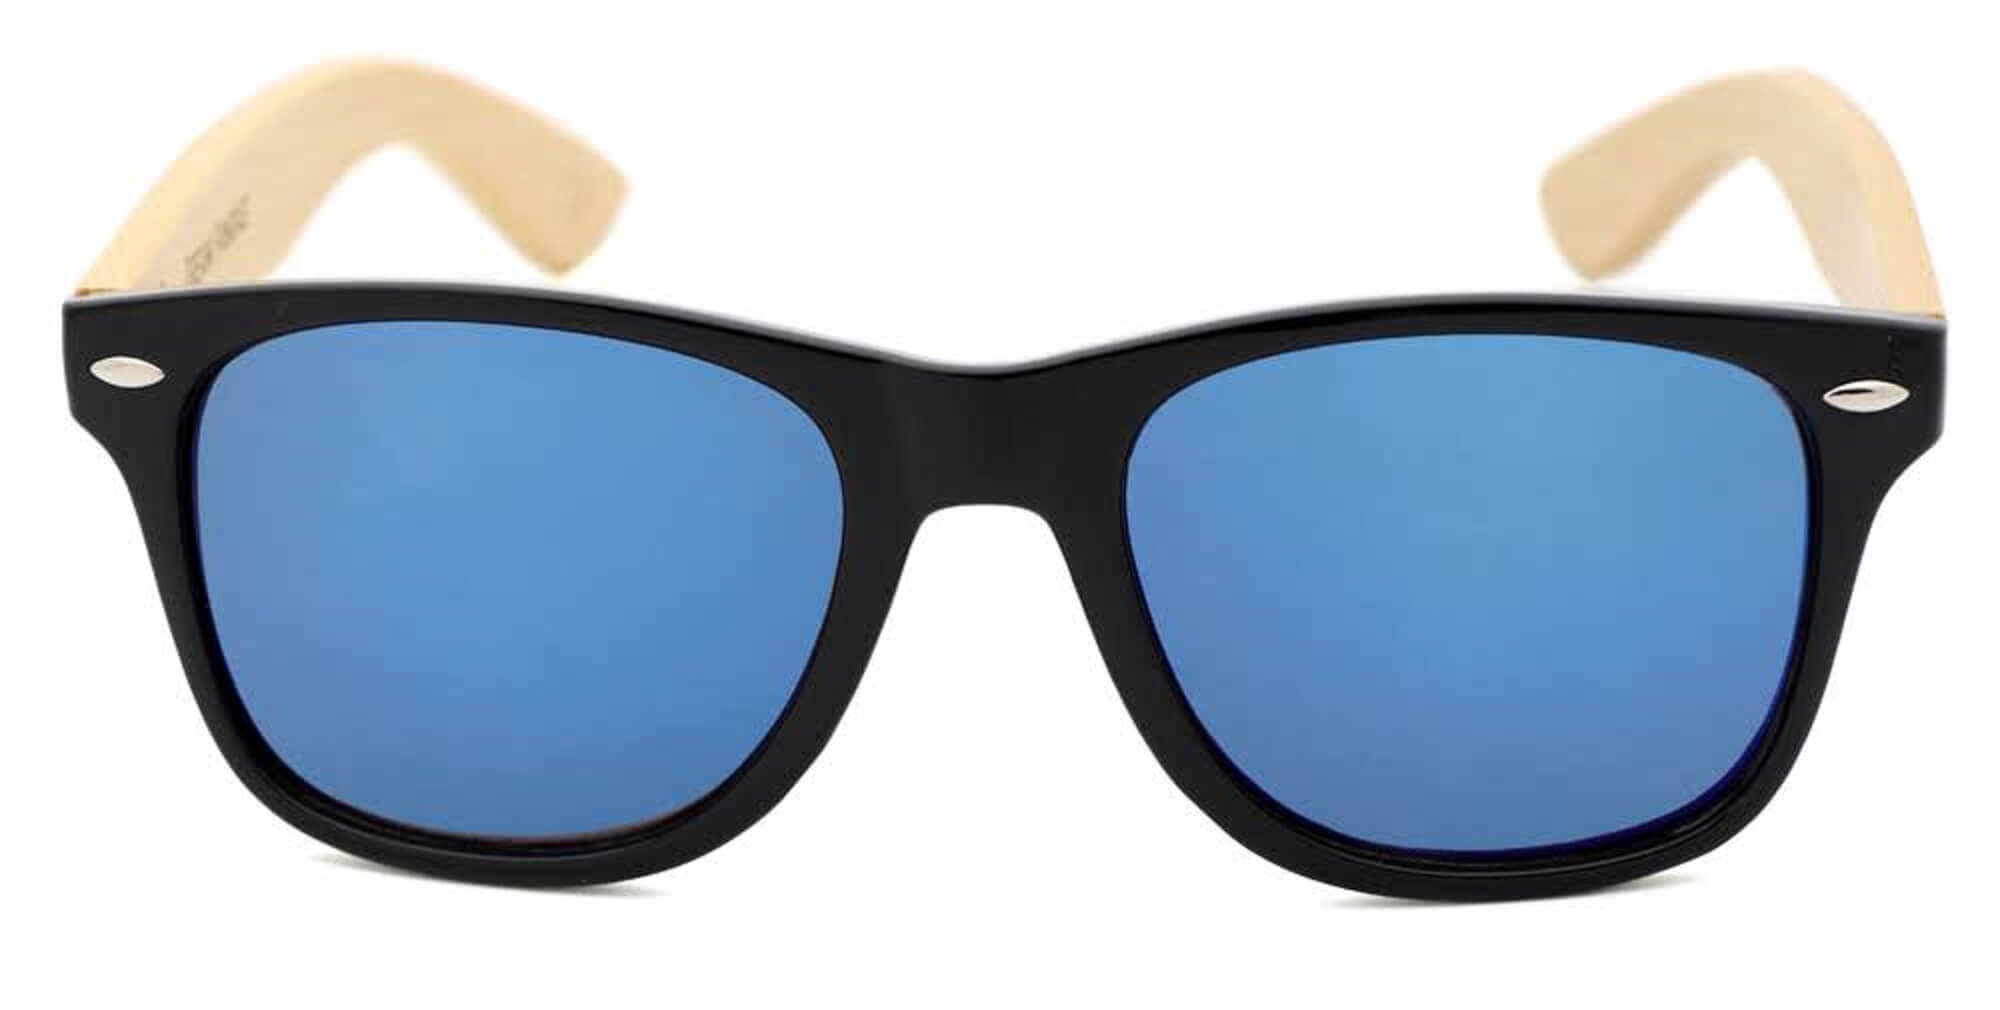 Black & Blue Wood Sunglasses